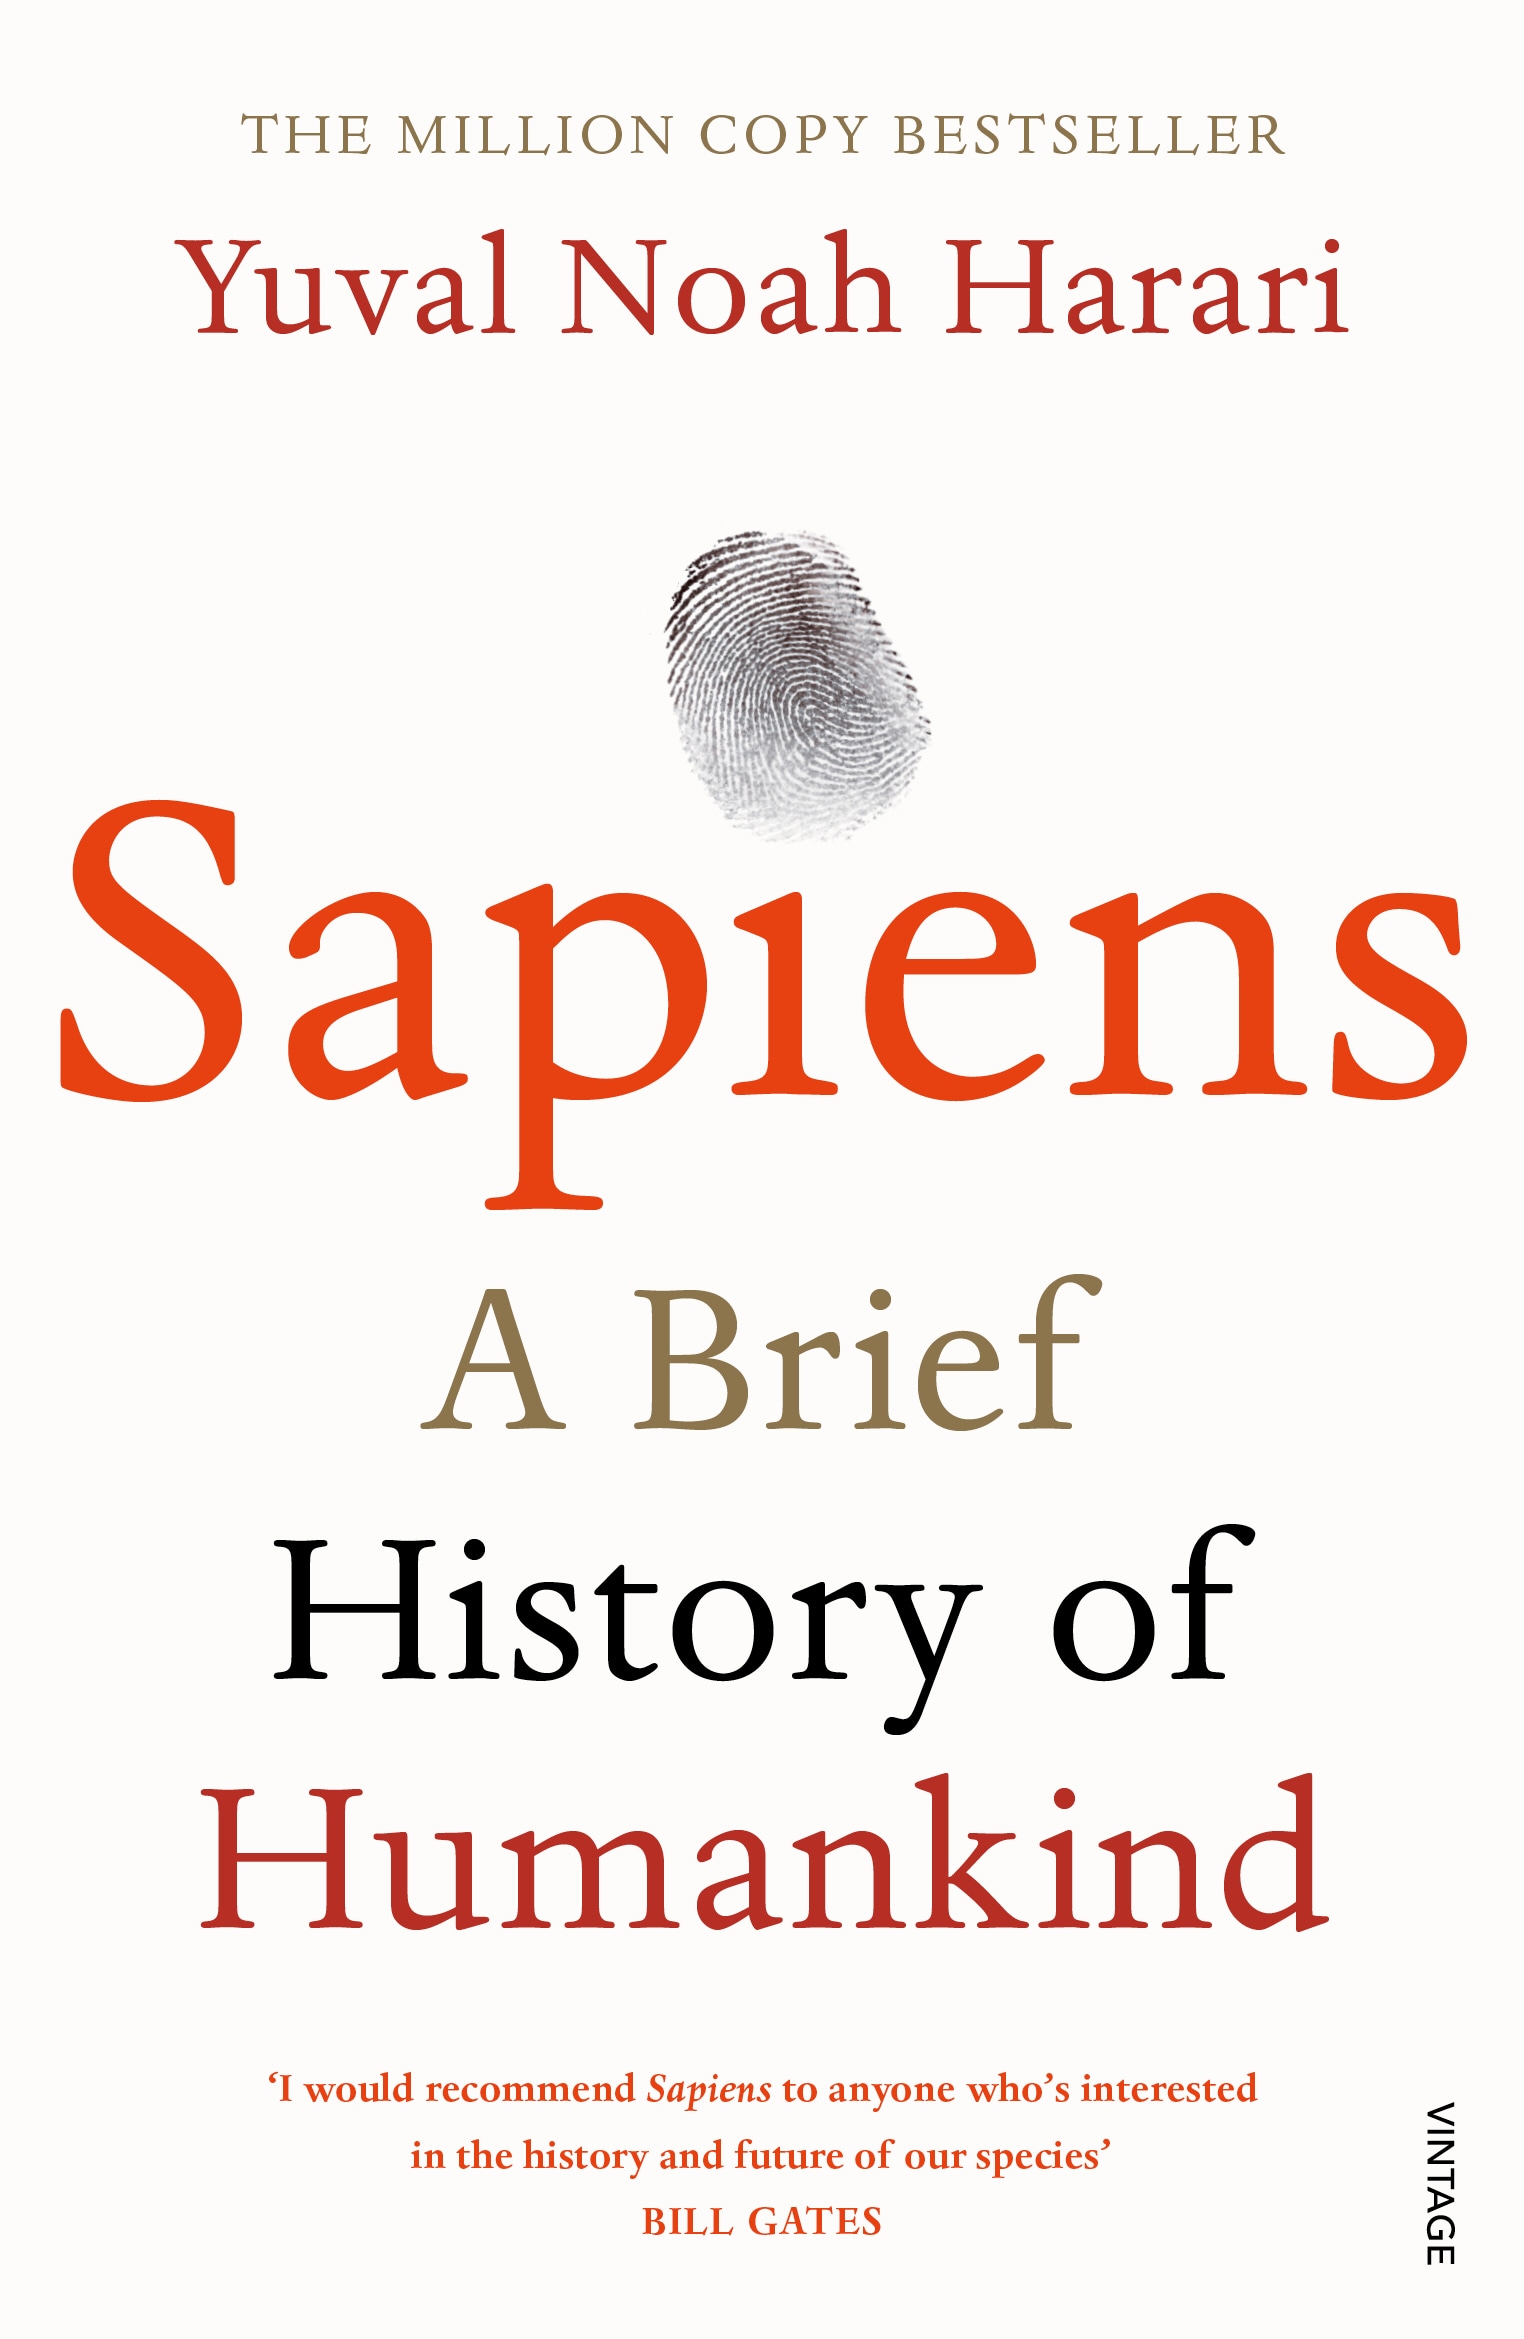 Book “Sapiens” by Yuval Noah Harari — April 30, 2015